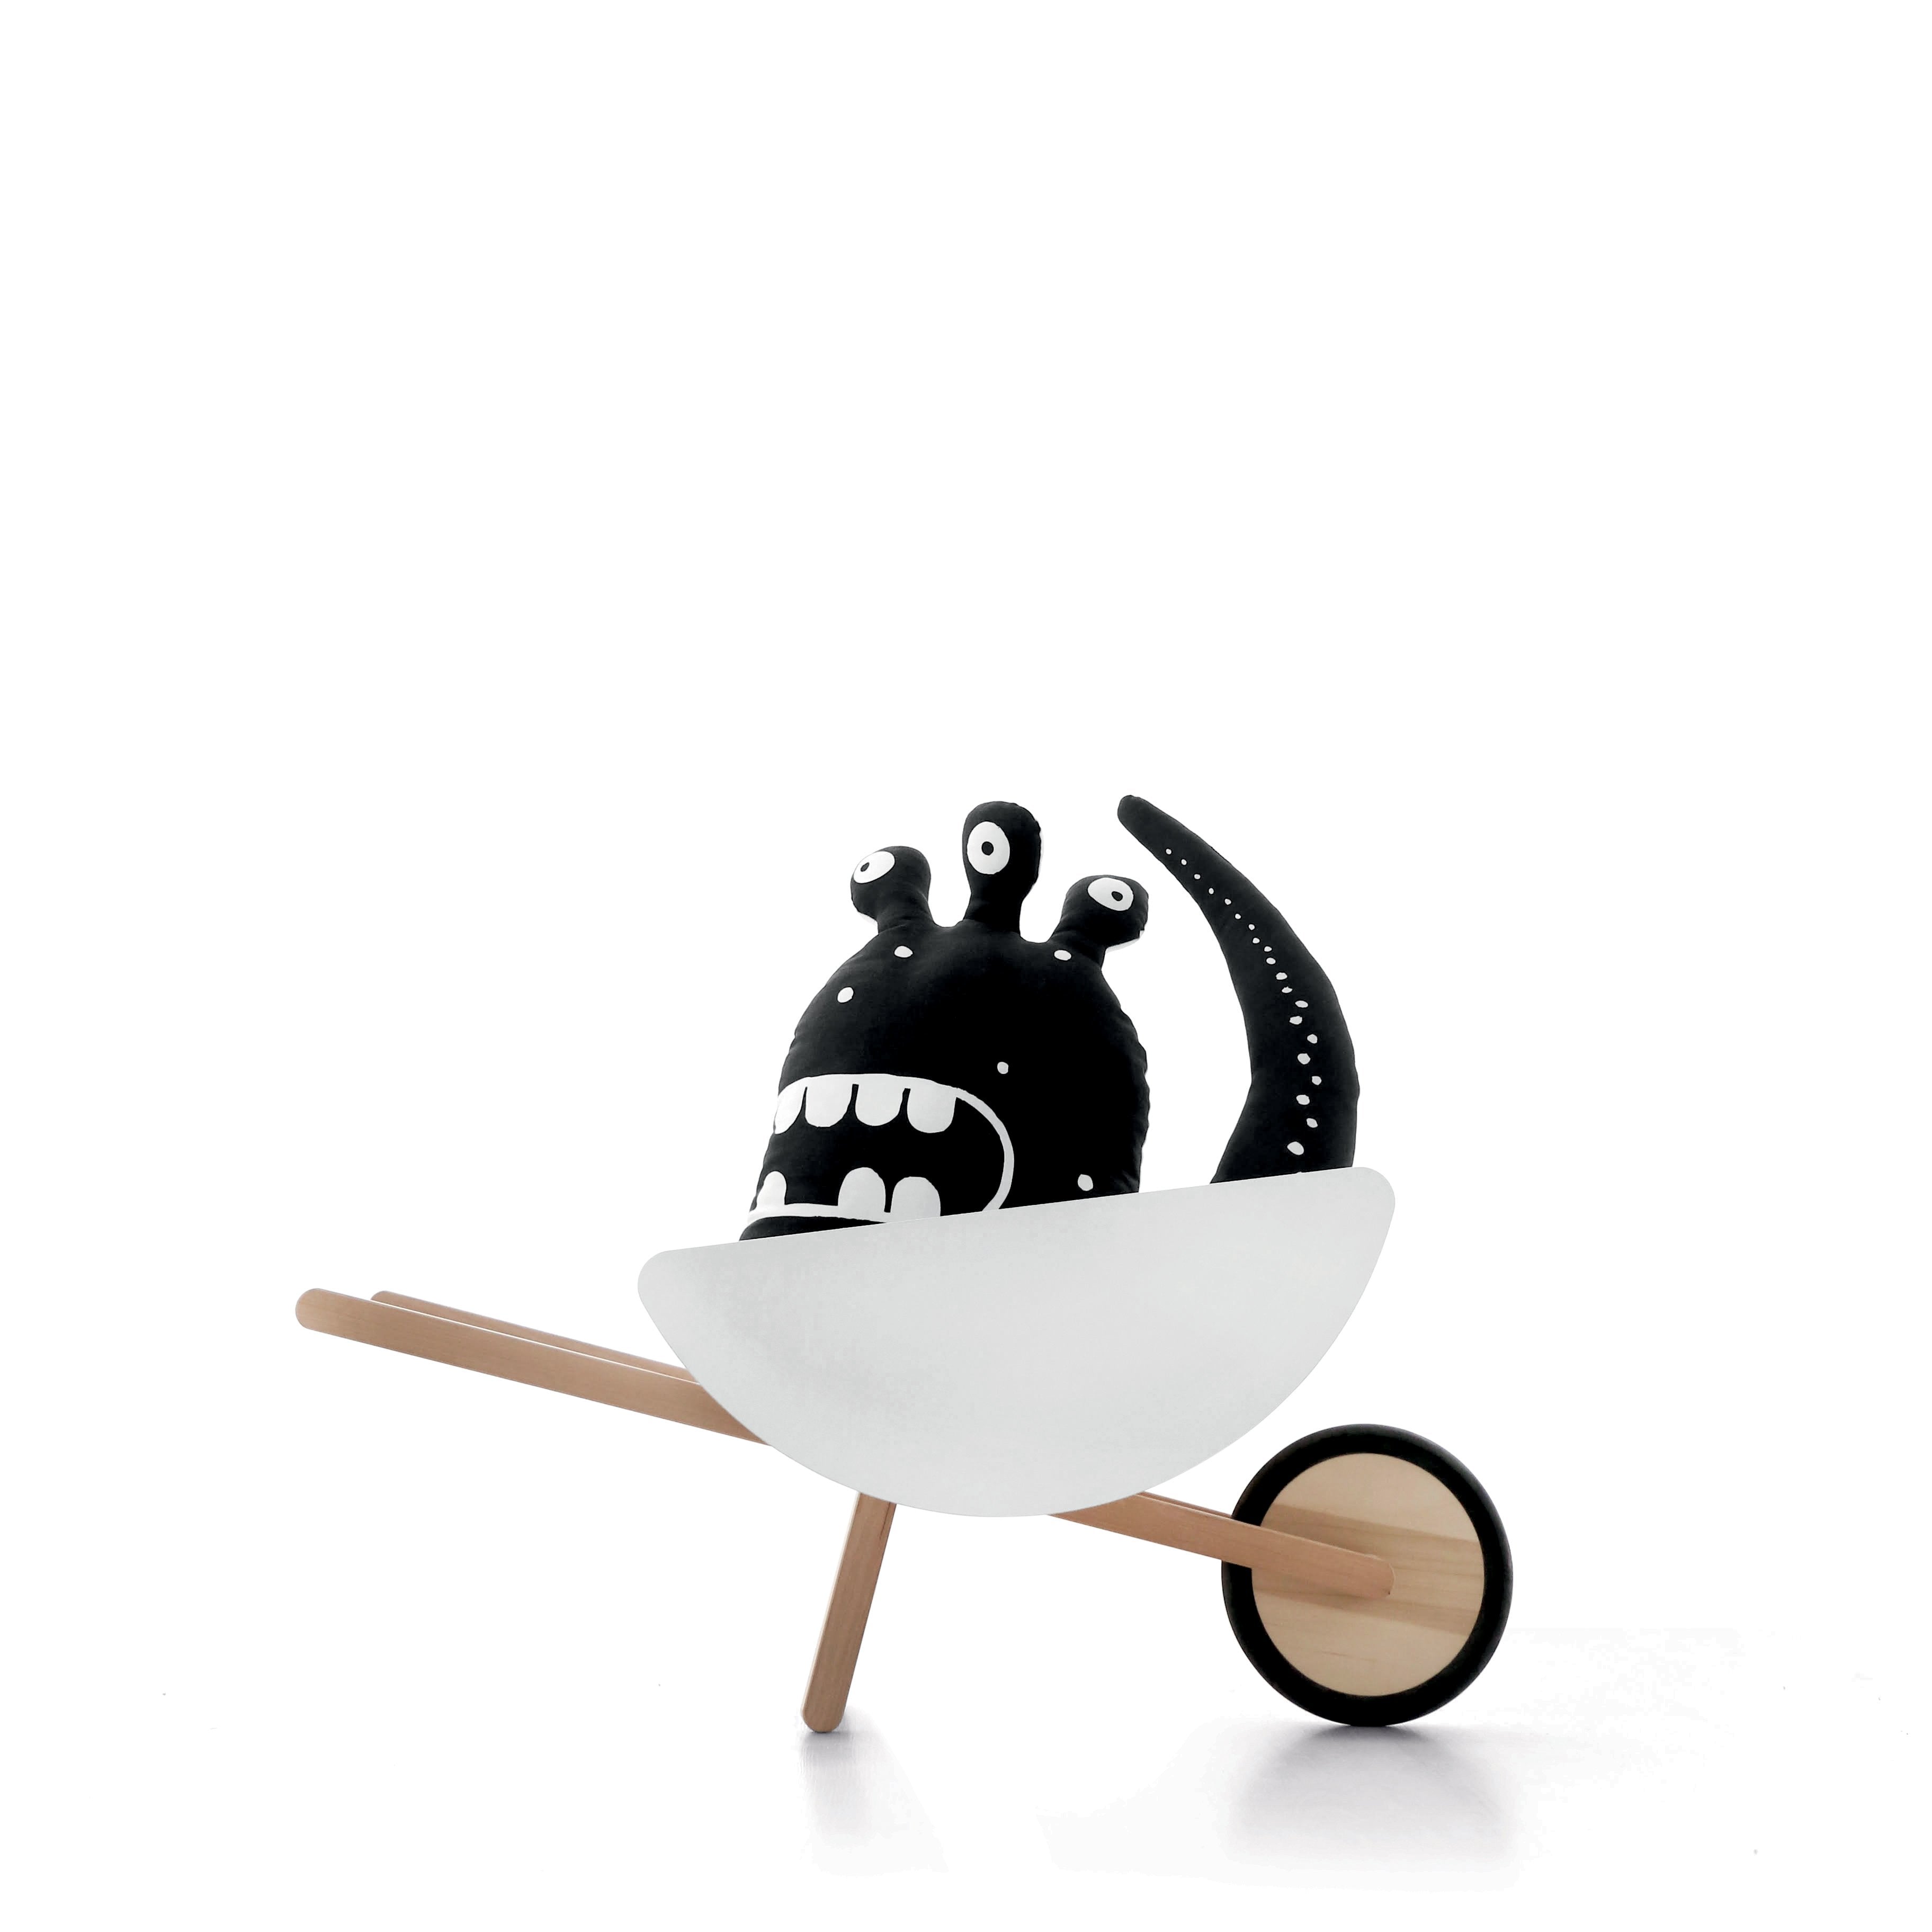 Wooden Toy Wheelbarrow for Kids